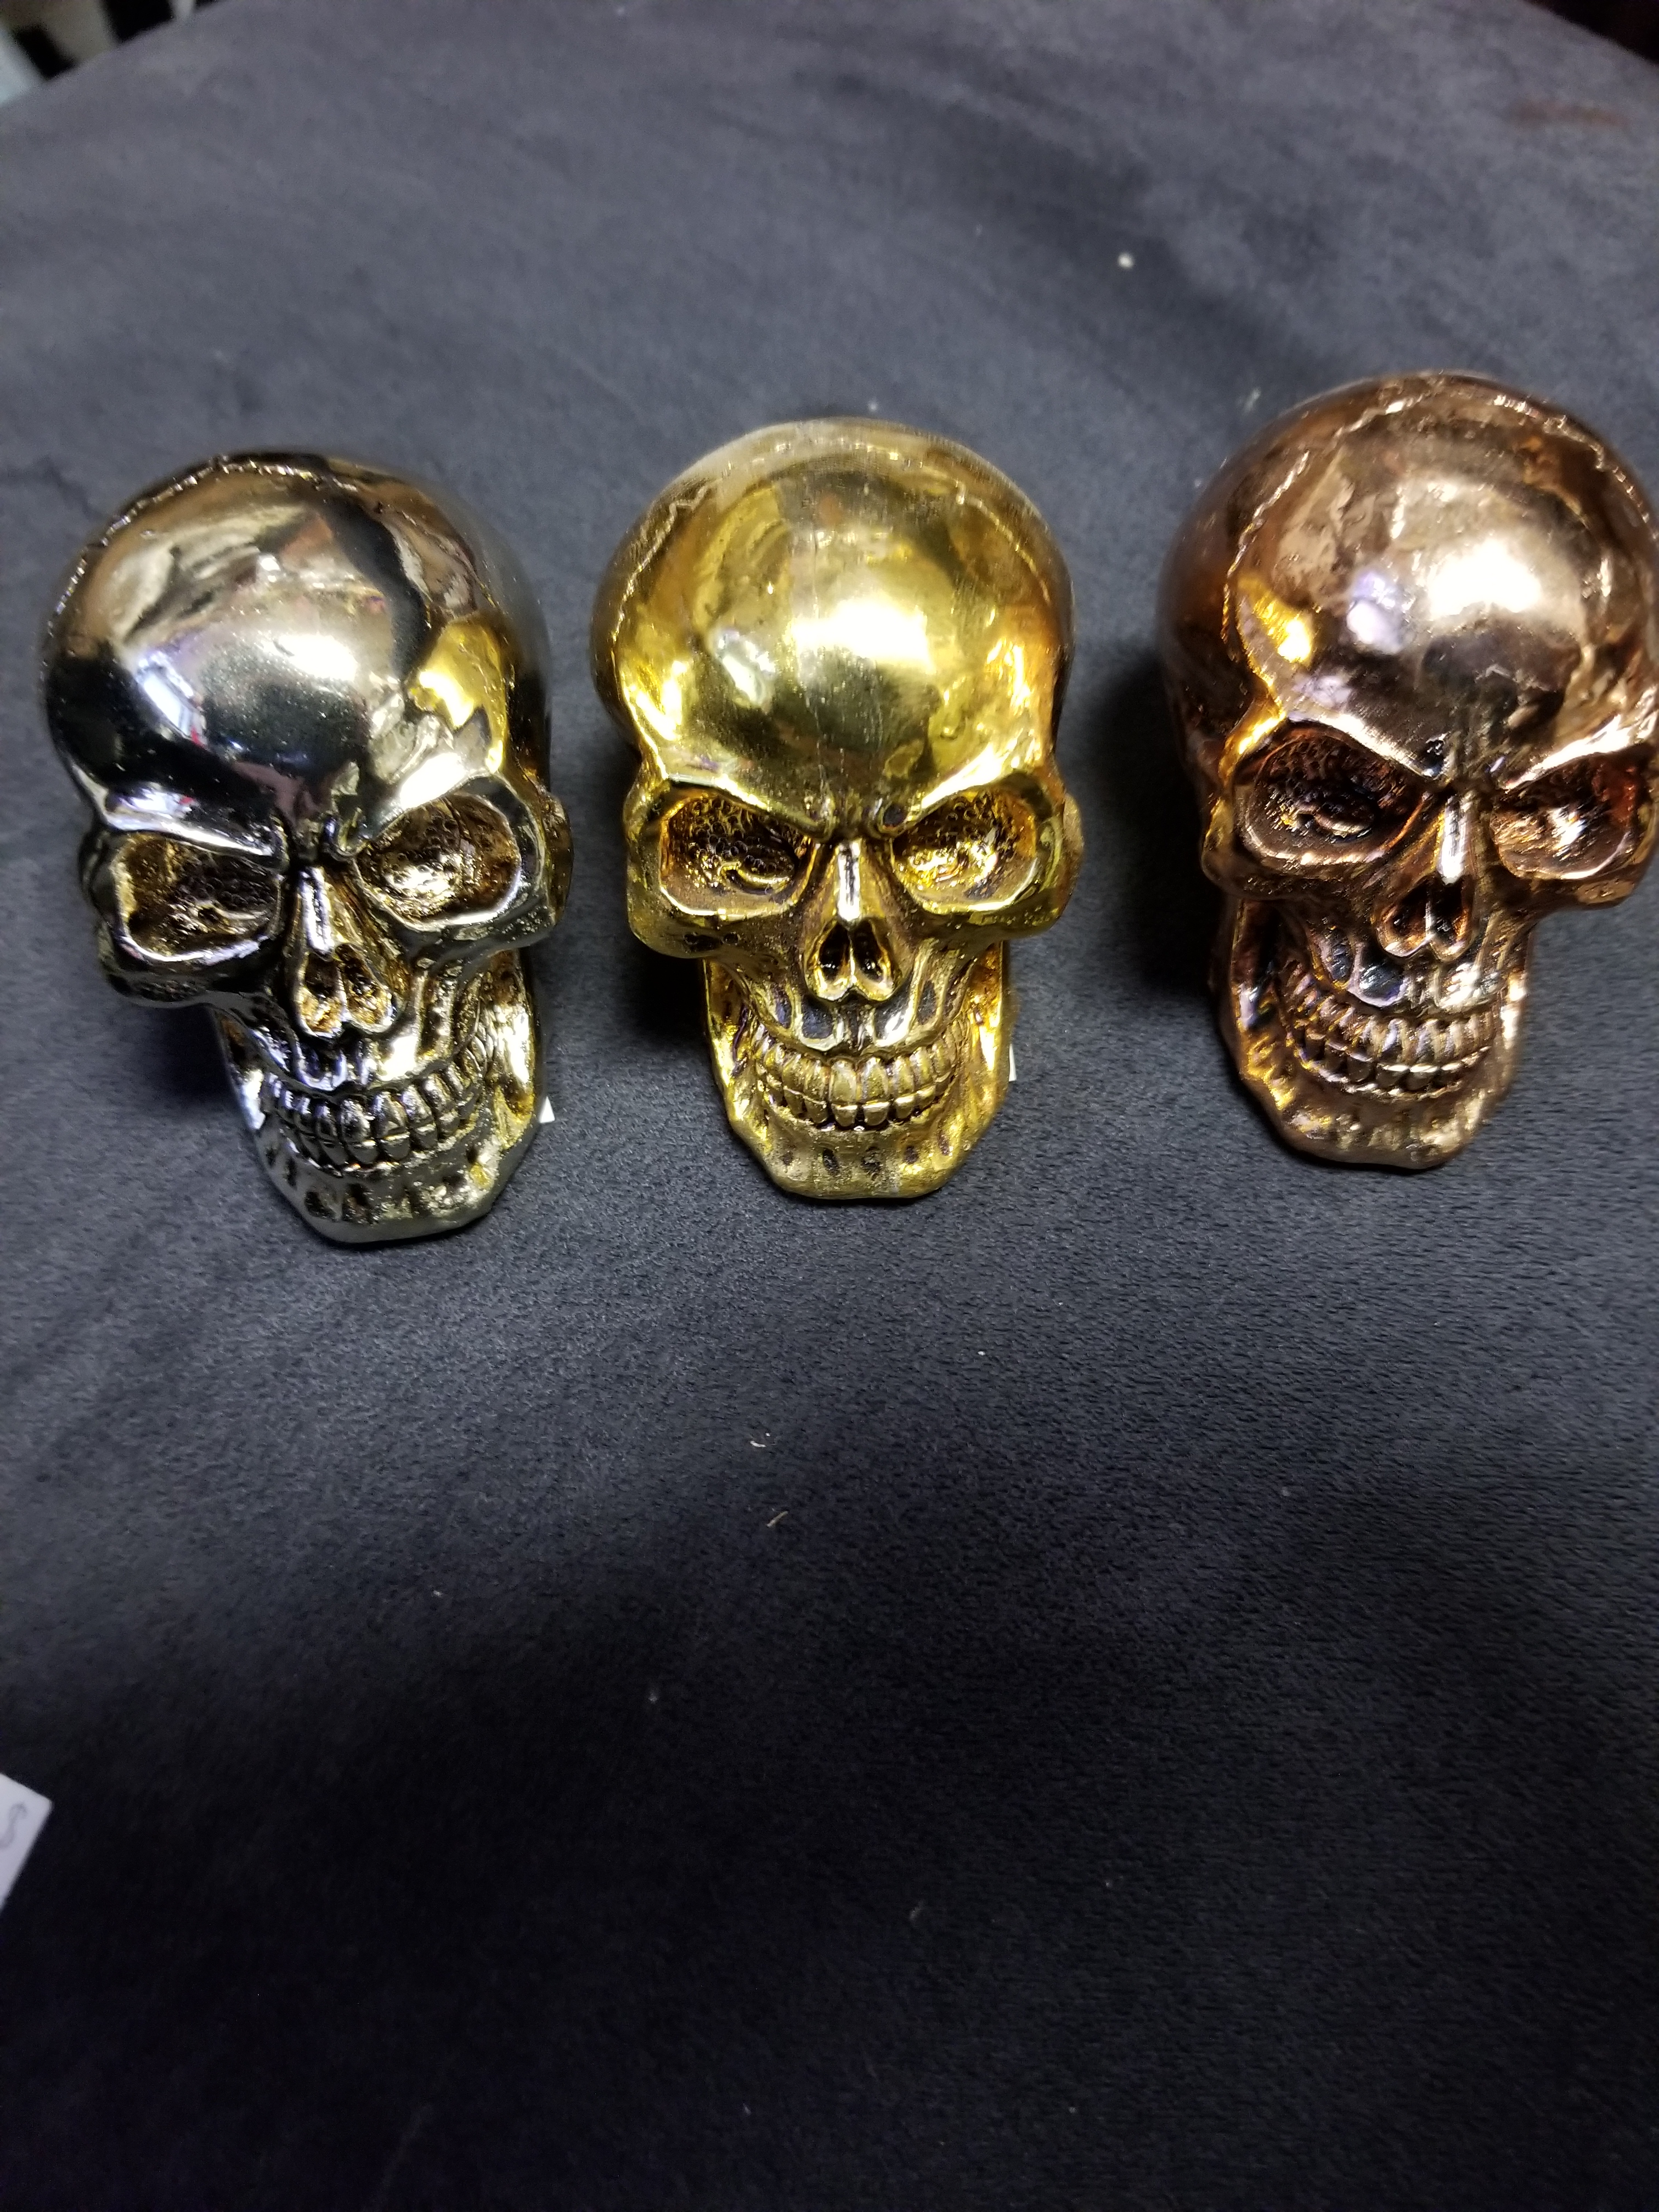 Small metallic colored skulls